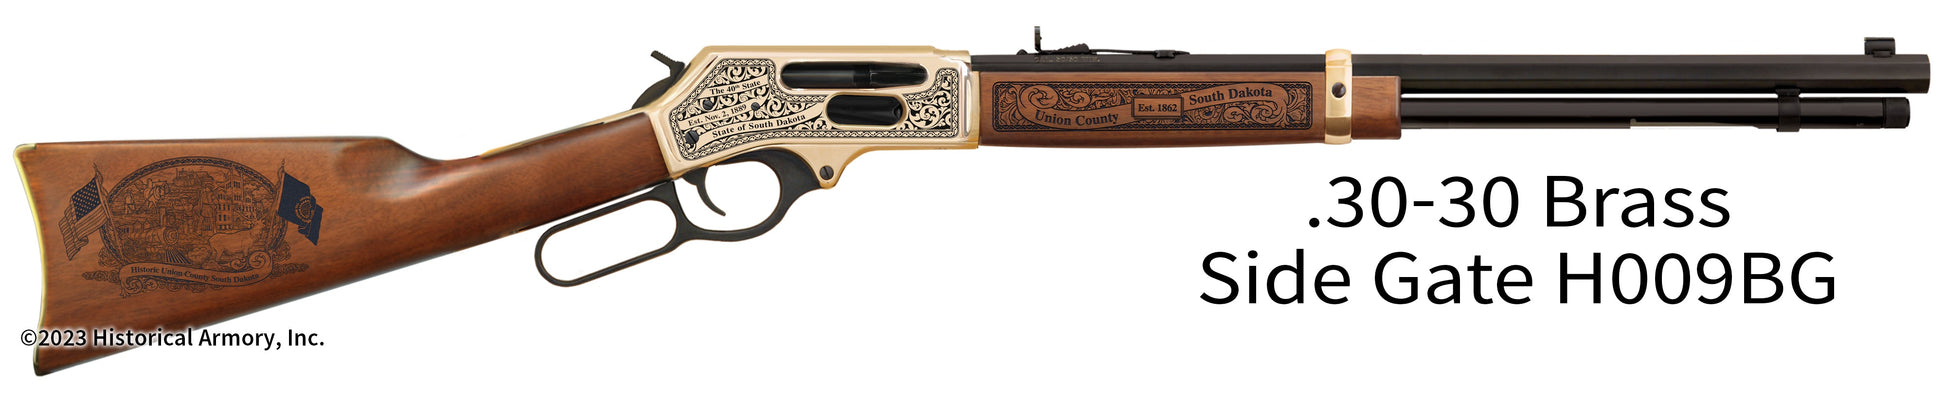 Union County South Dakota Engraved Henry .30-30 Brass Side Gate Rifle